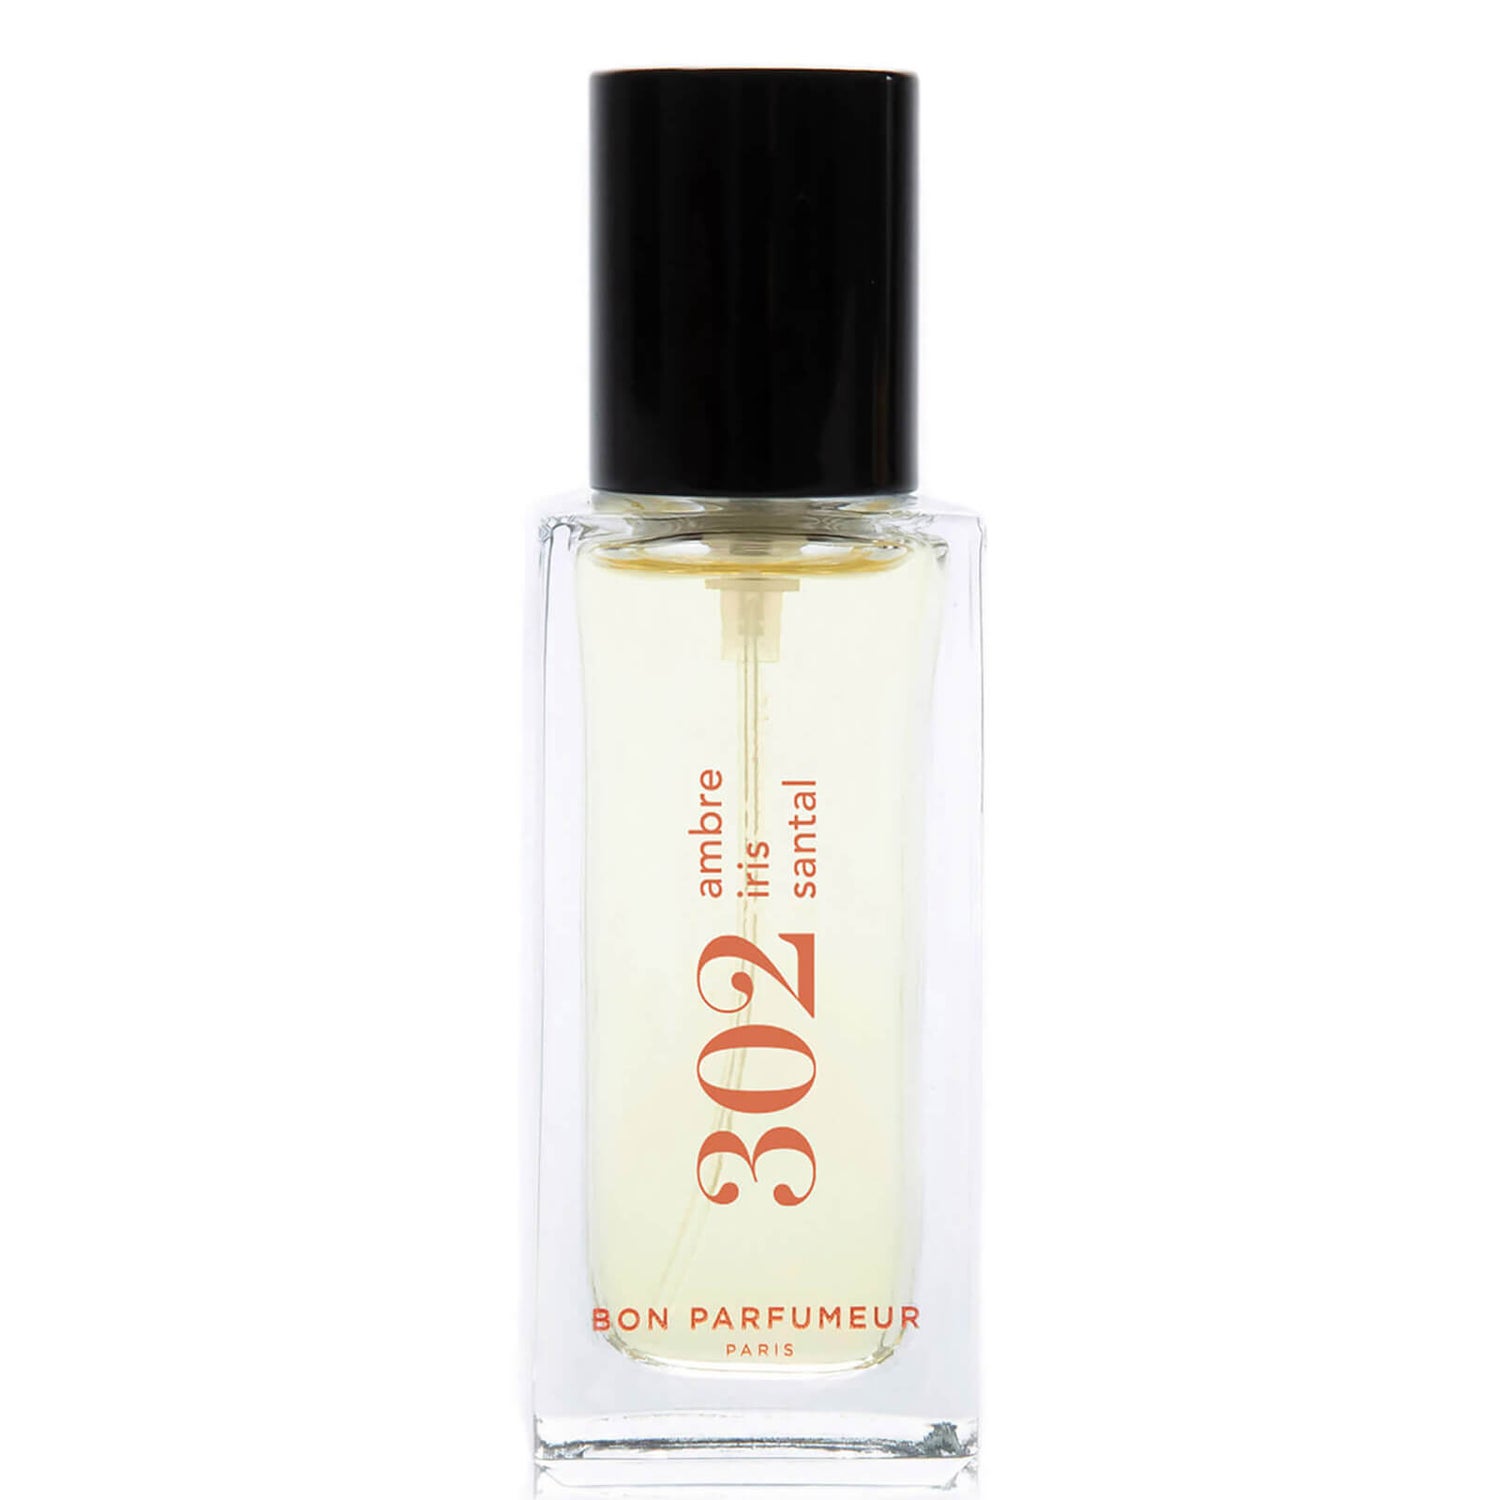 Bon Parfumeur 302 Amber Iris Sandalwood Eau de Parfum - 15ml